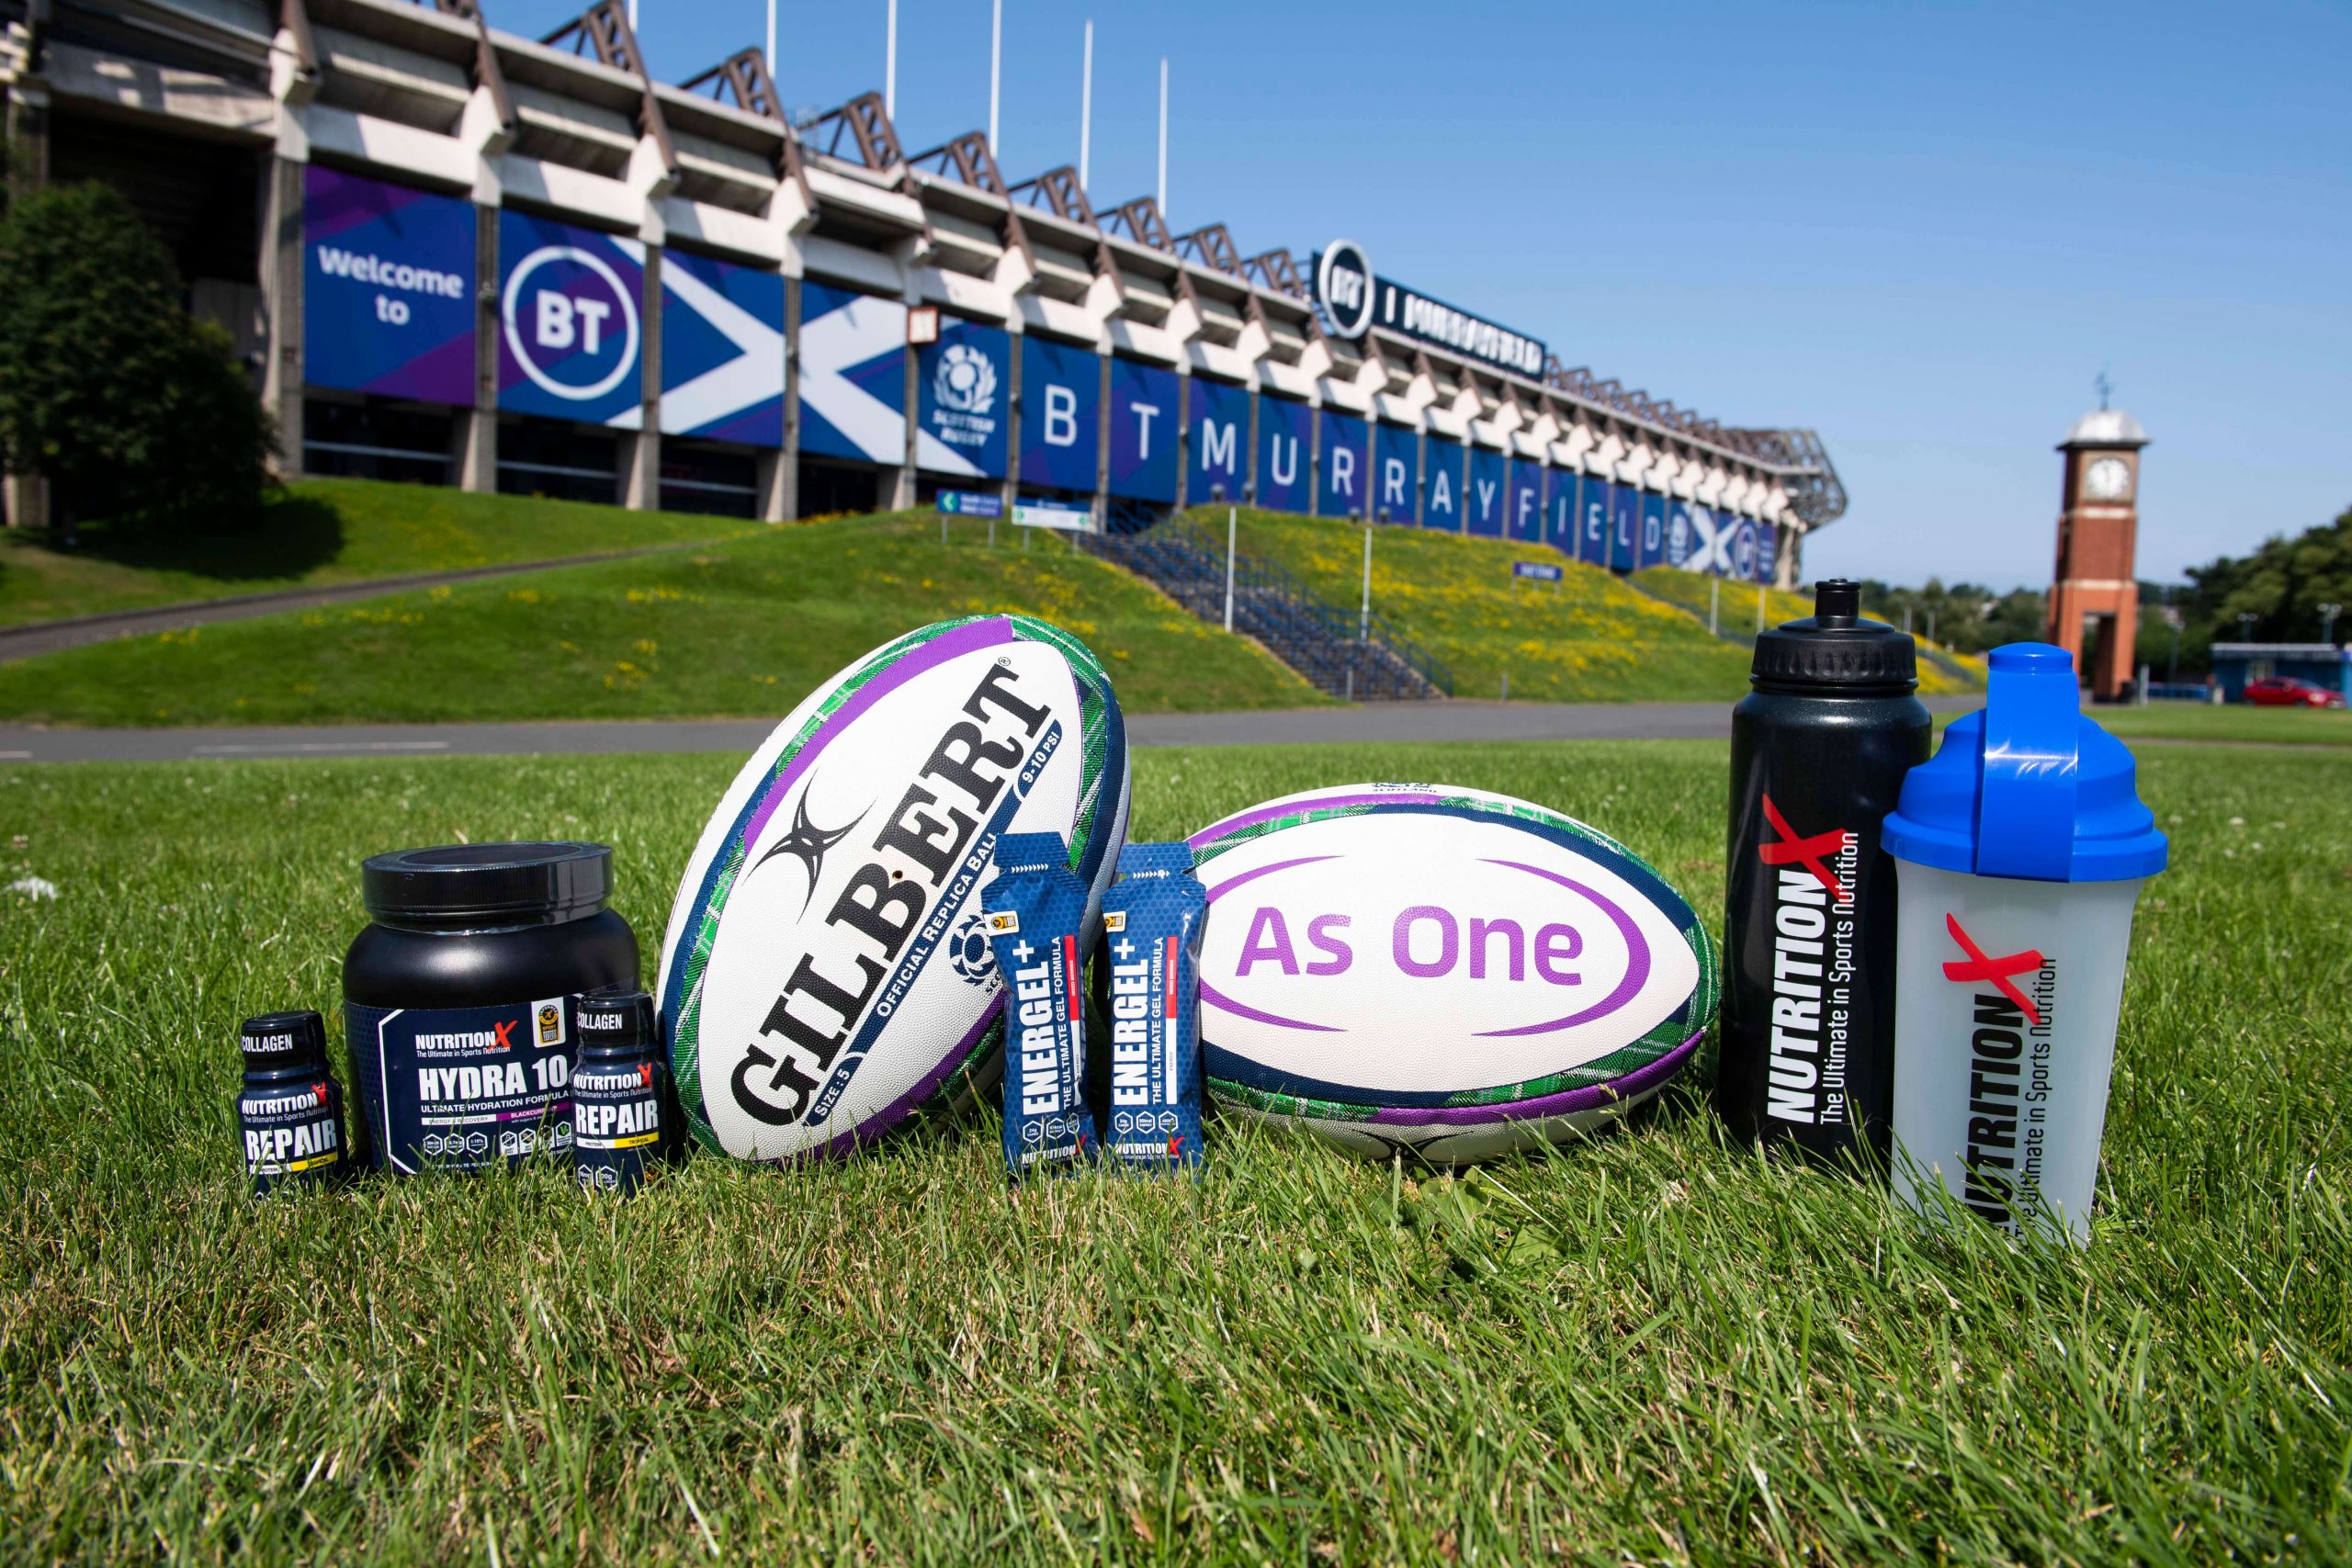 Three Year Partnership with Scottish Rugby Kicks Off